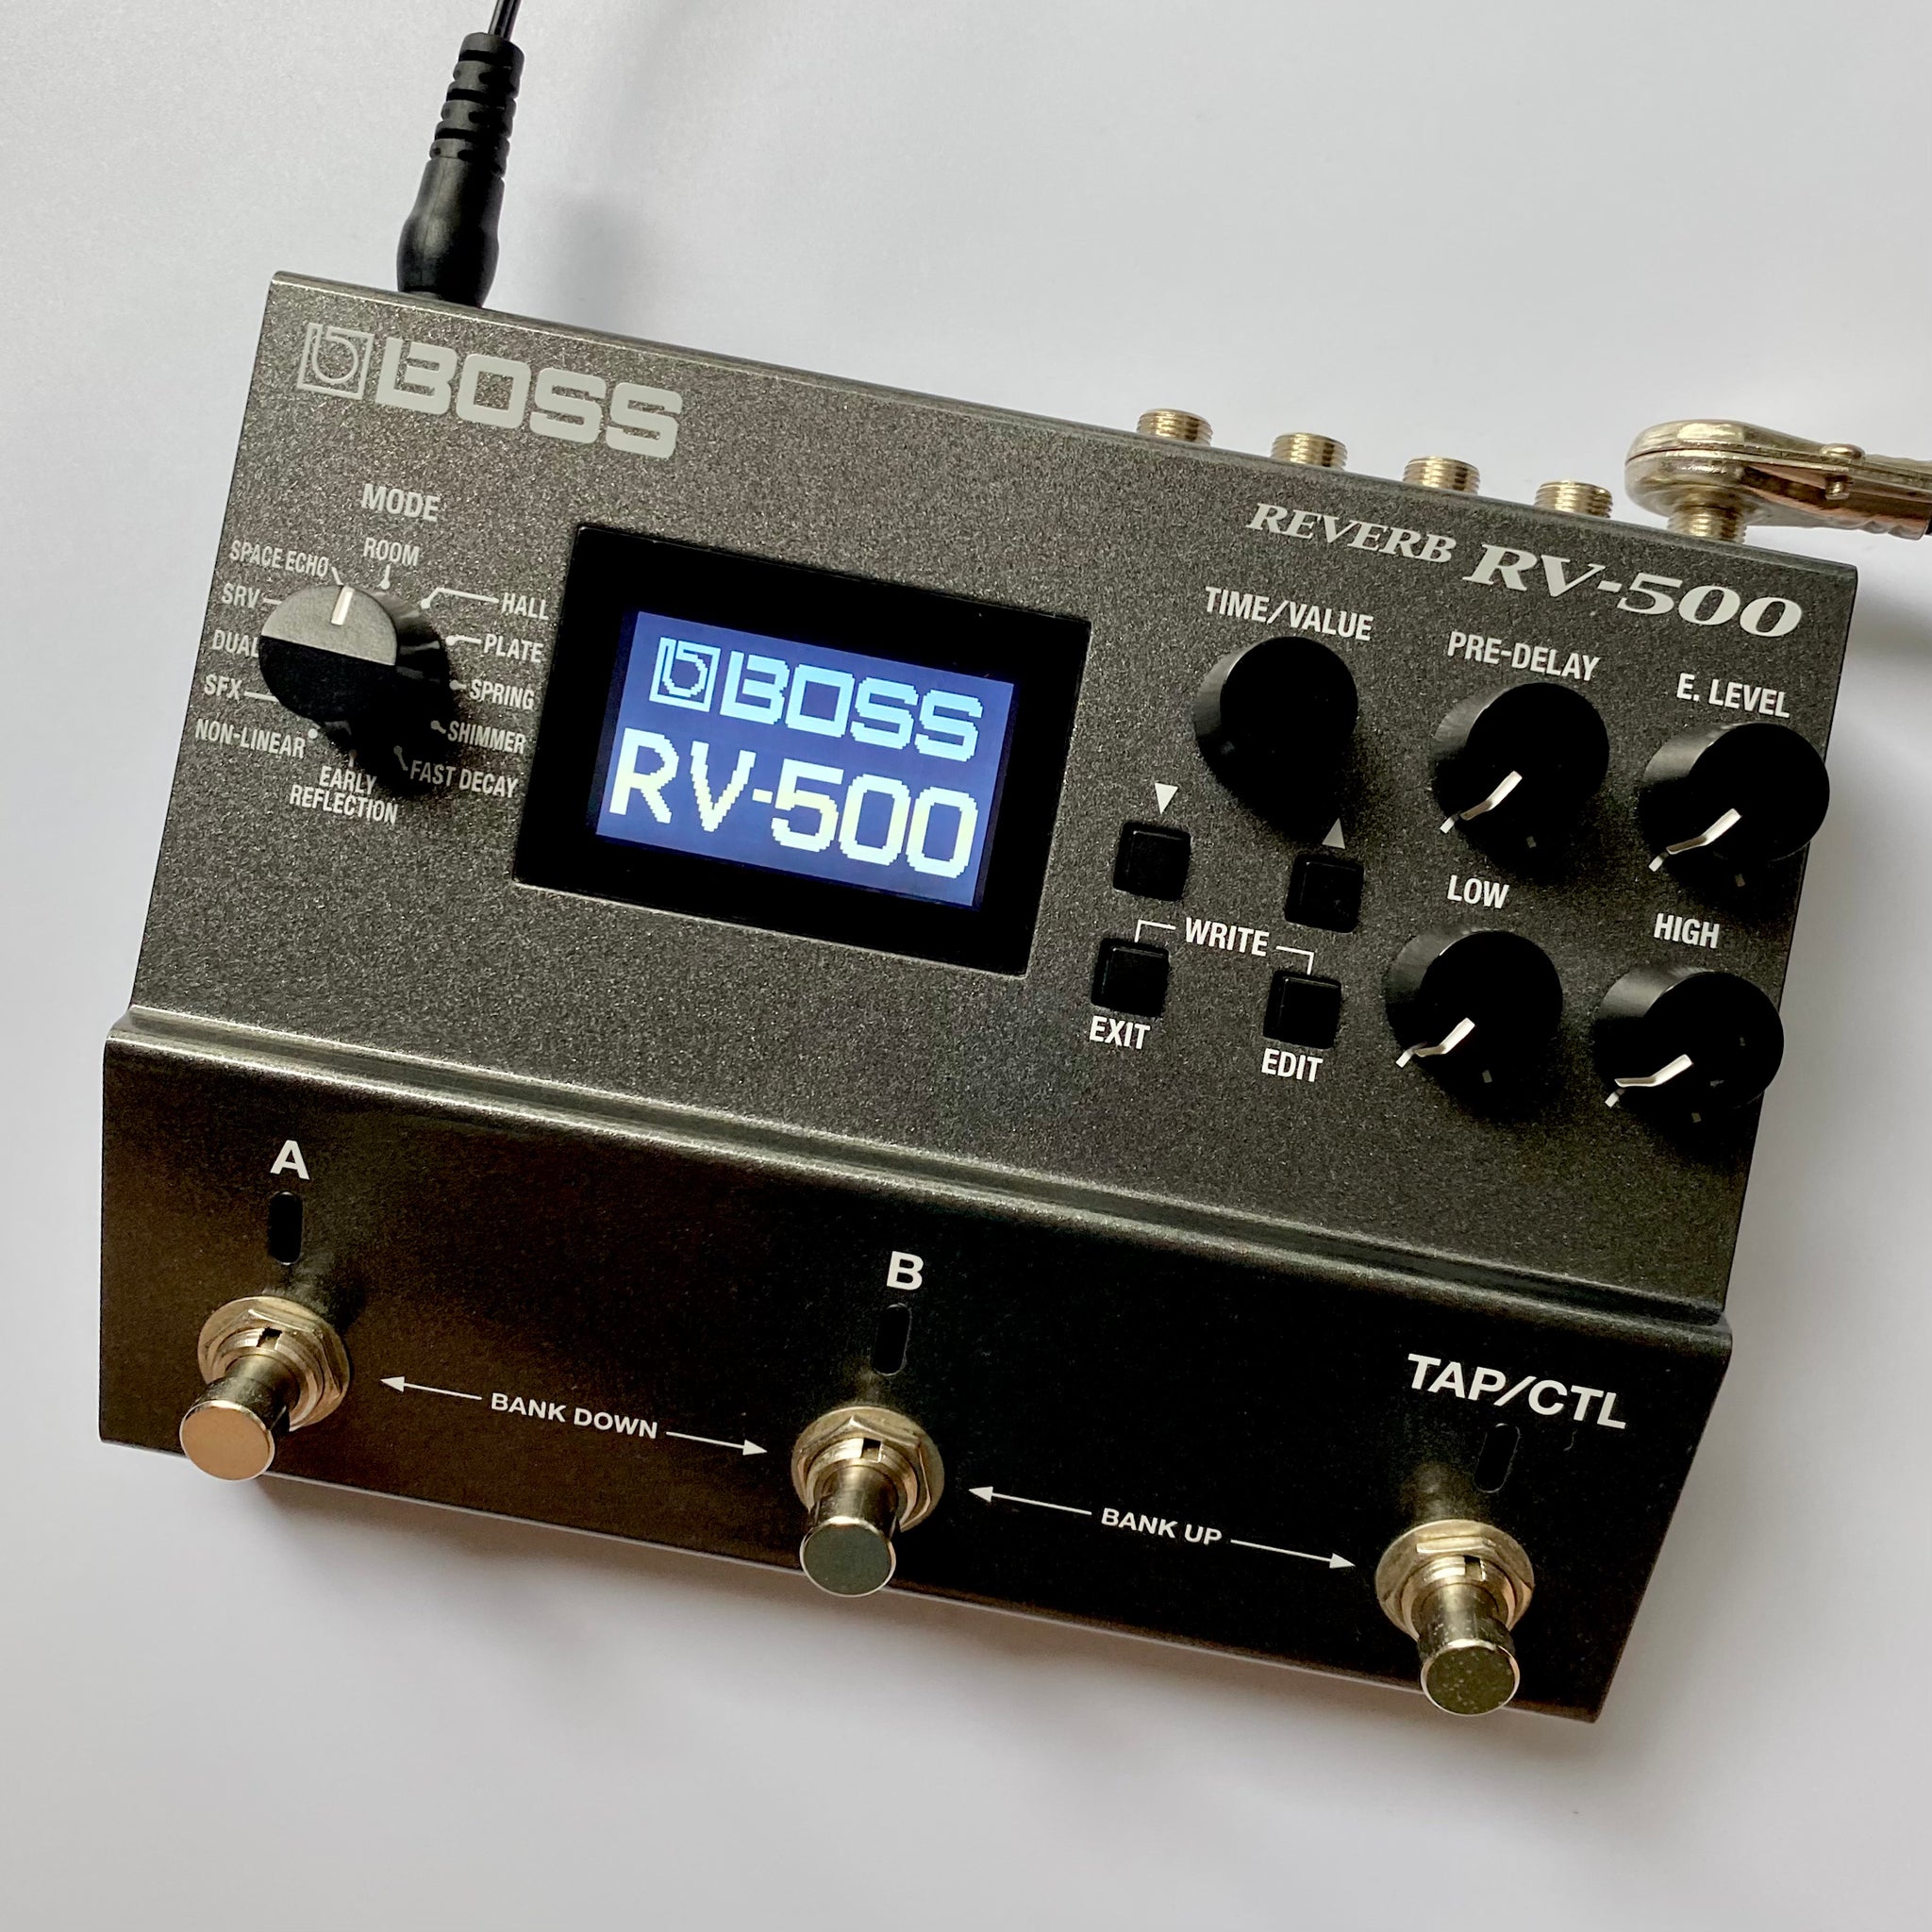 BOSSBOSS RV-500 RIVERB リバーブ - ギター